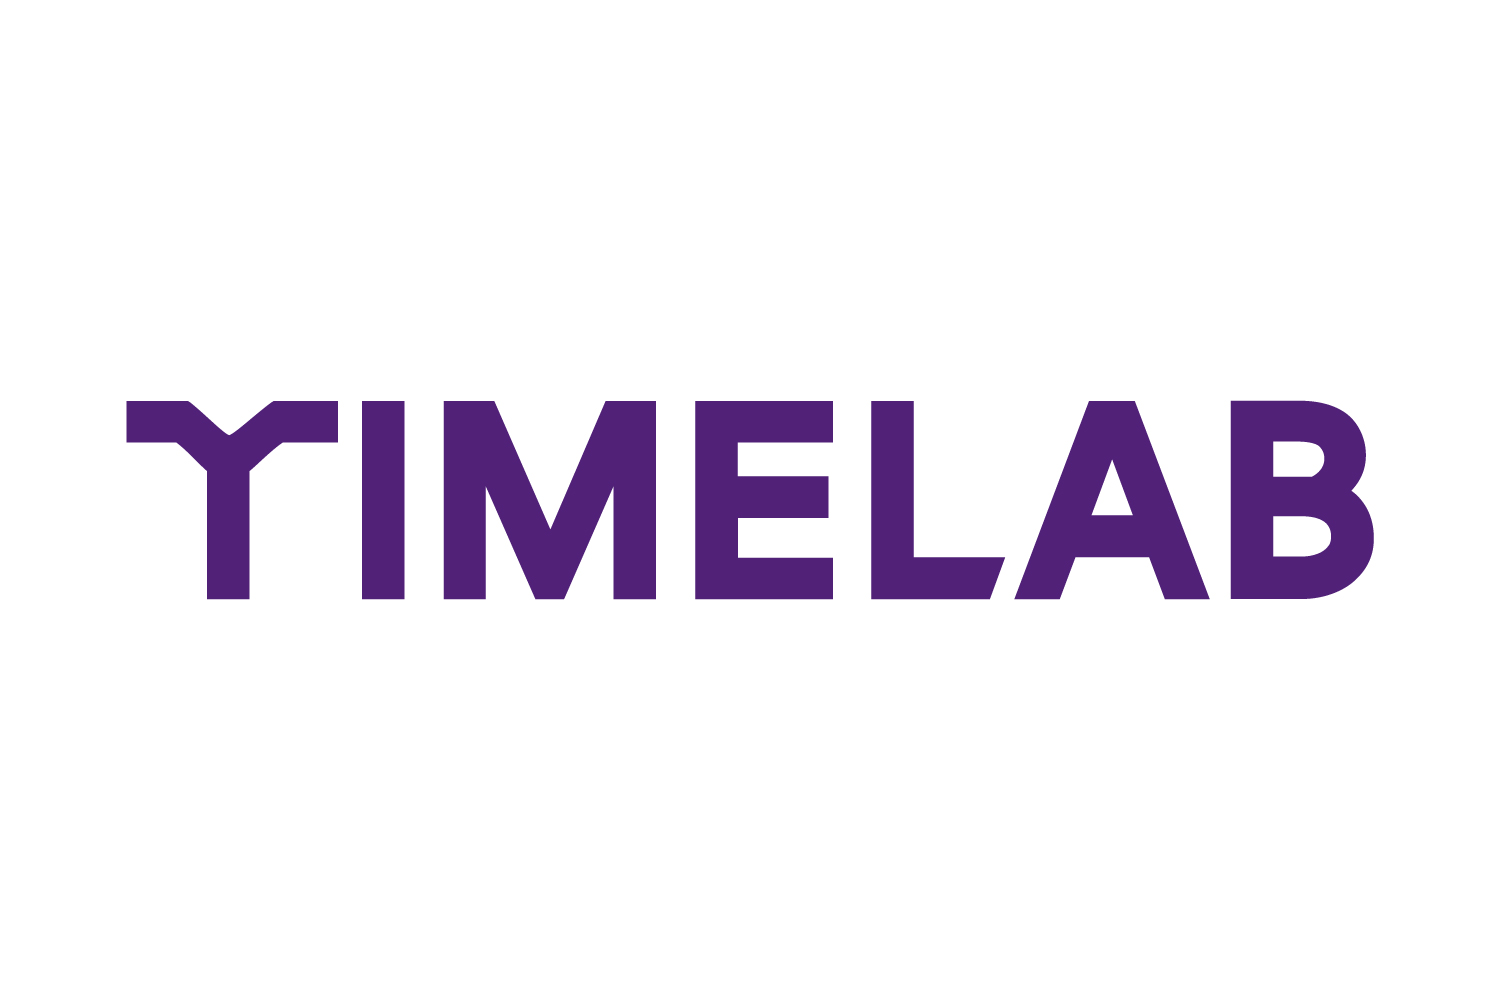 Timelab